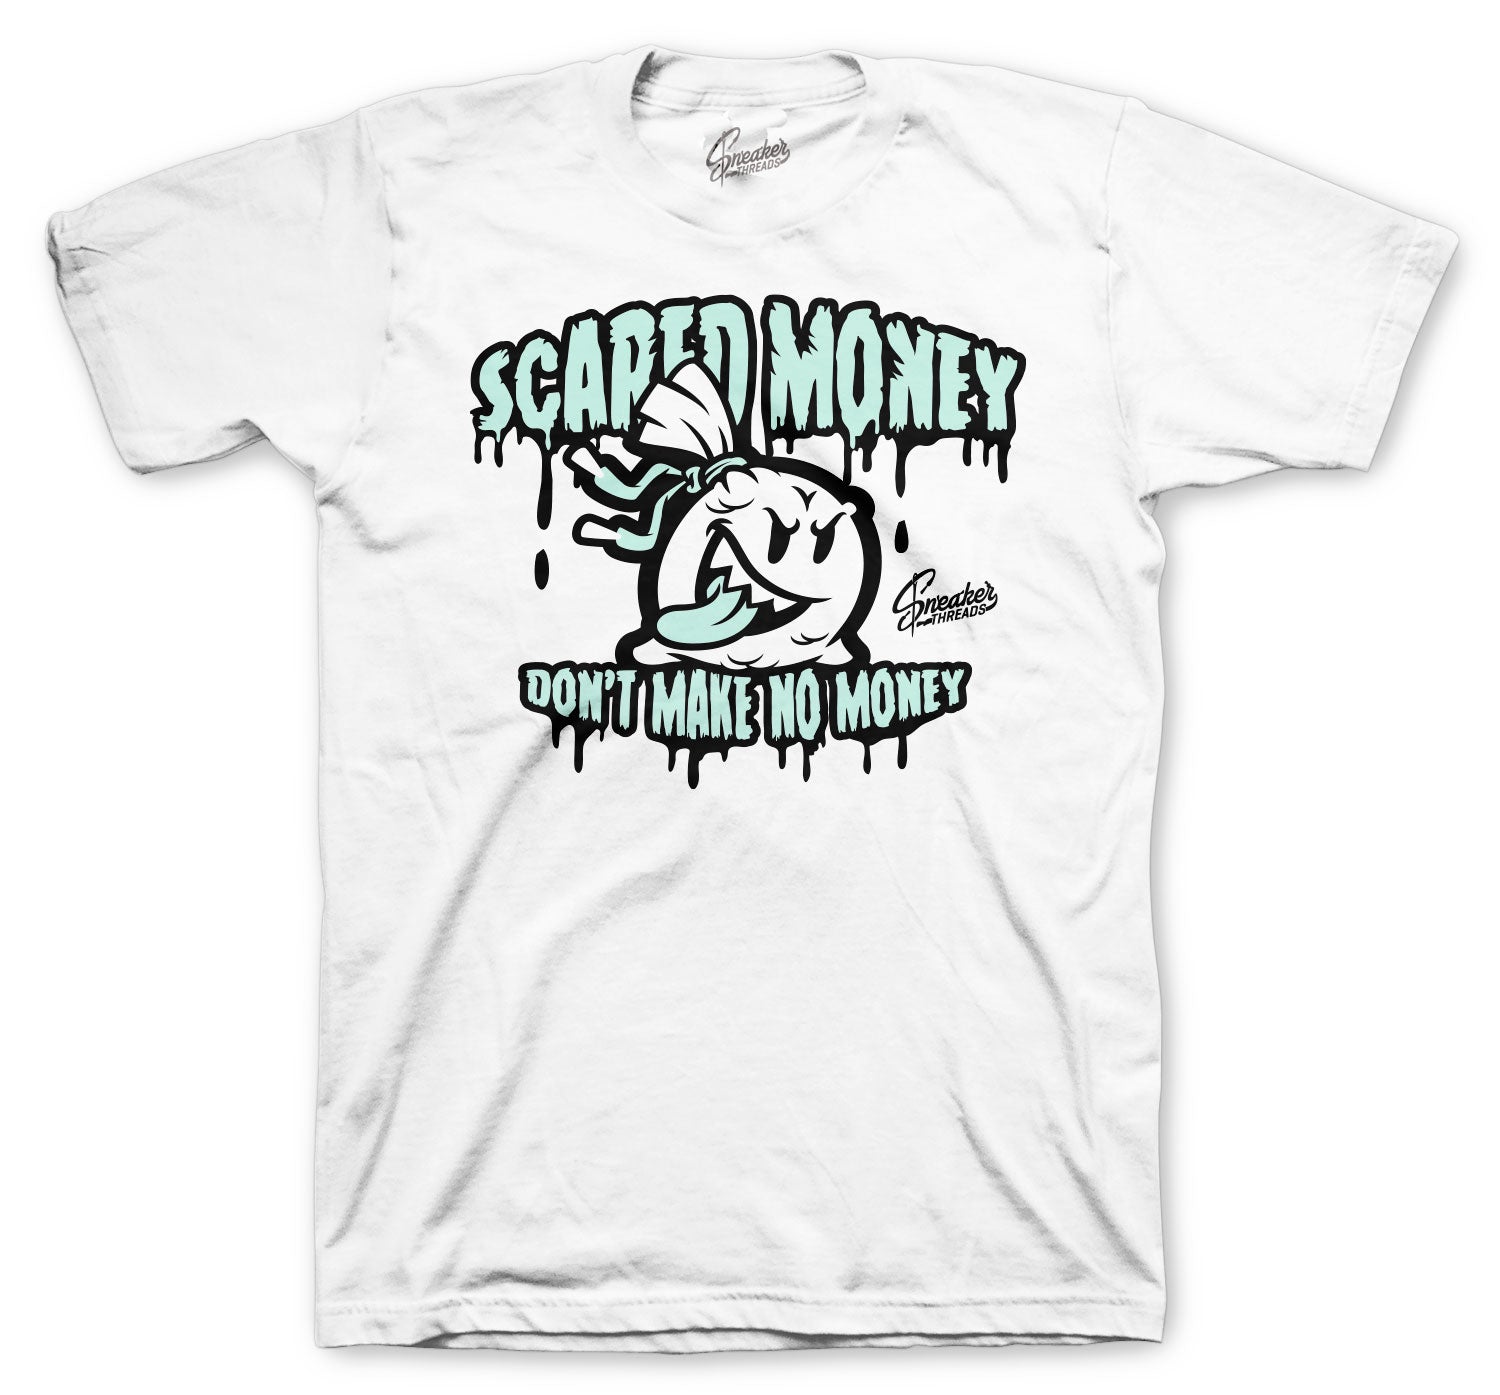 Retro 12 Easter Shirt - Scared Money - White